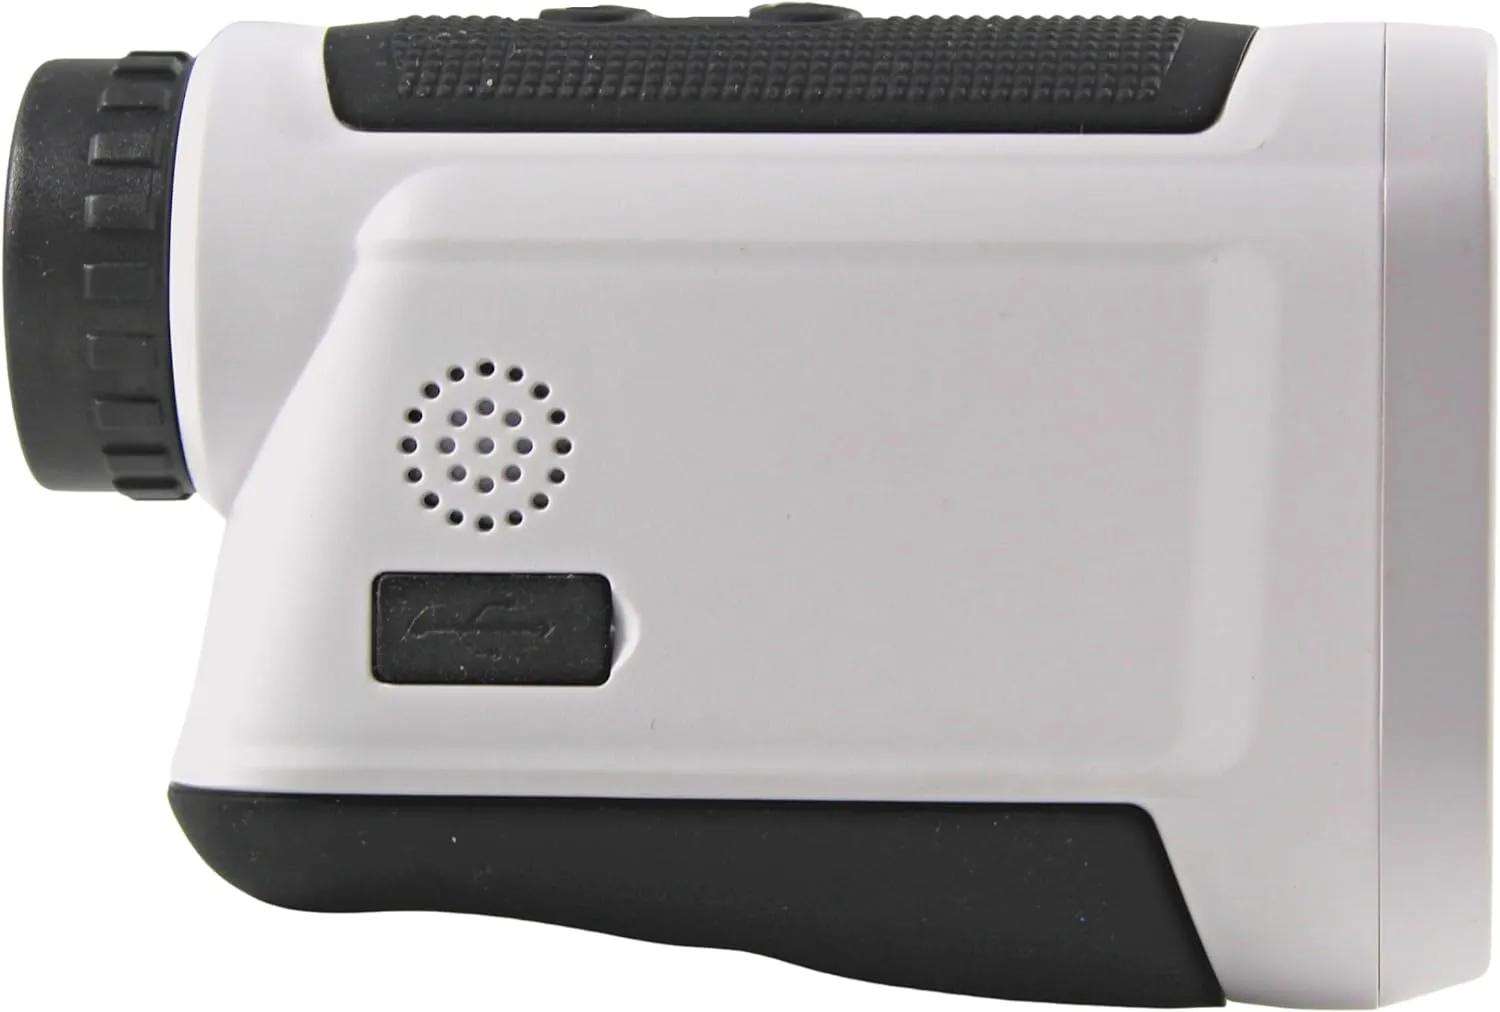 Infinite Discs Apex NP-600 Rangefinder device